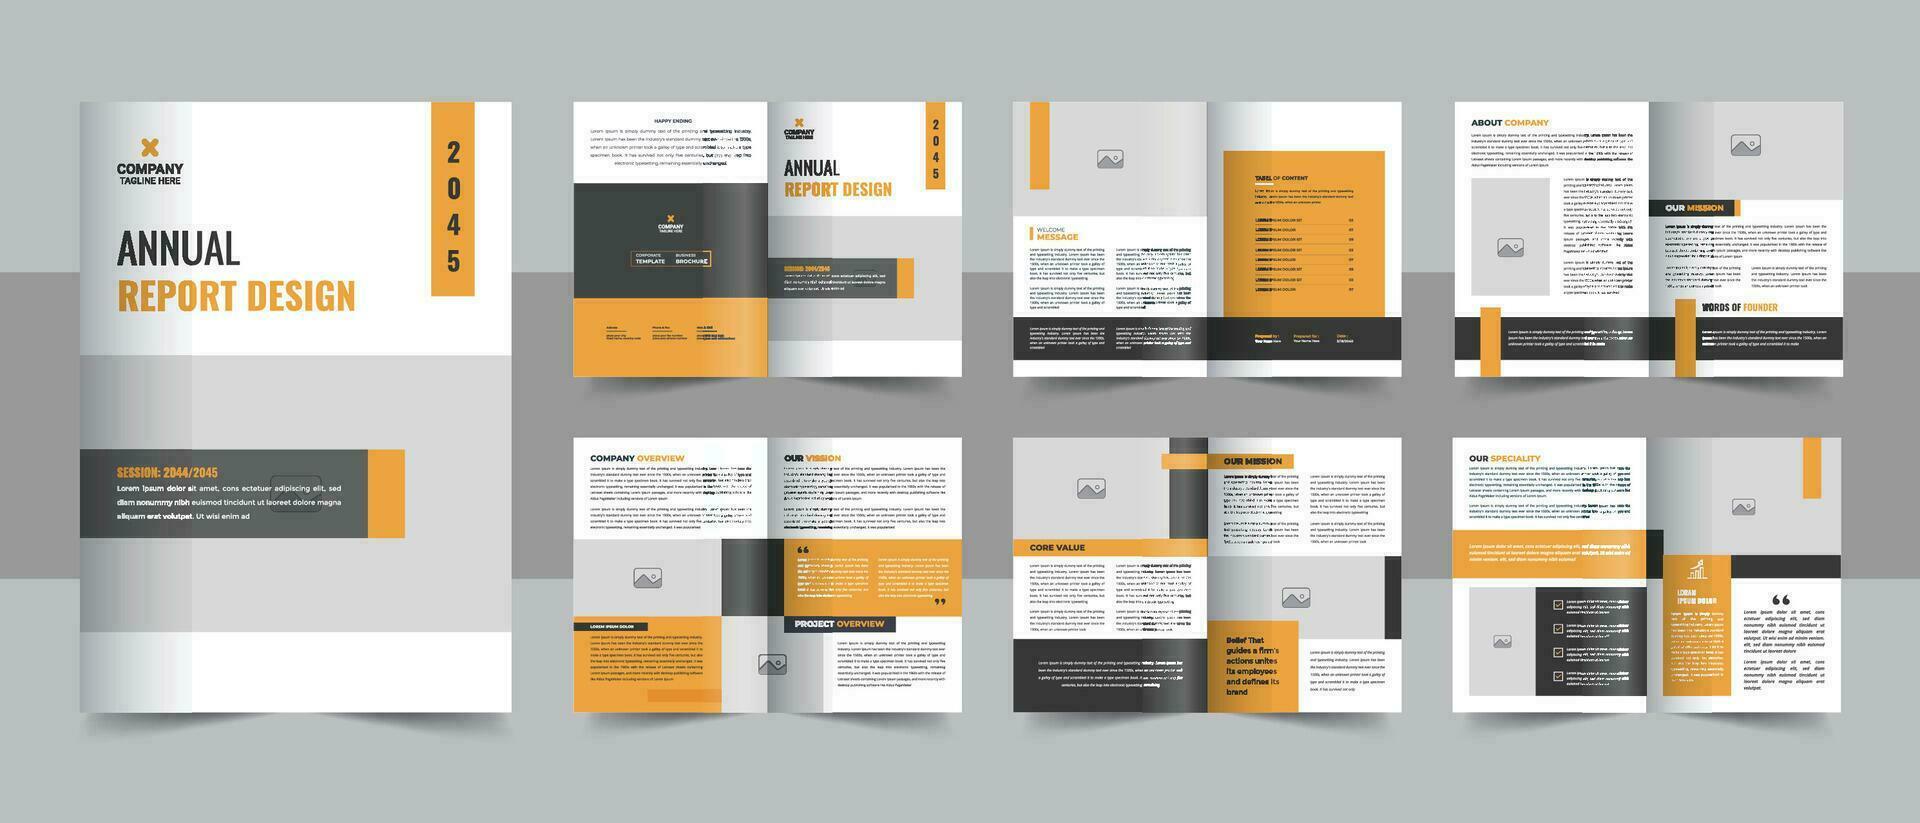 corporativo empresa perfil folleto anual reporte folleto negocio propuesta diseño concepto vector